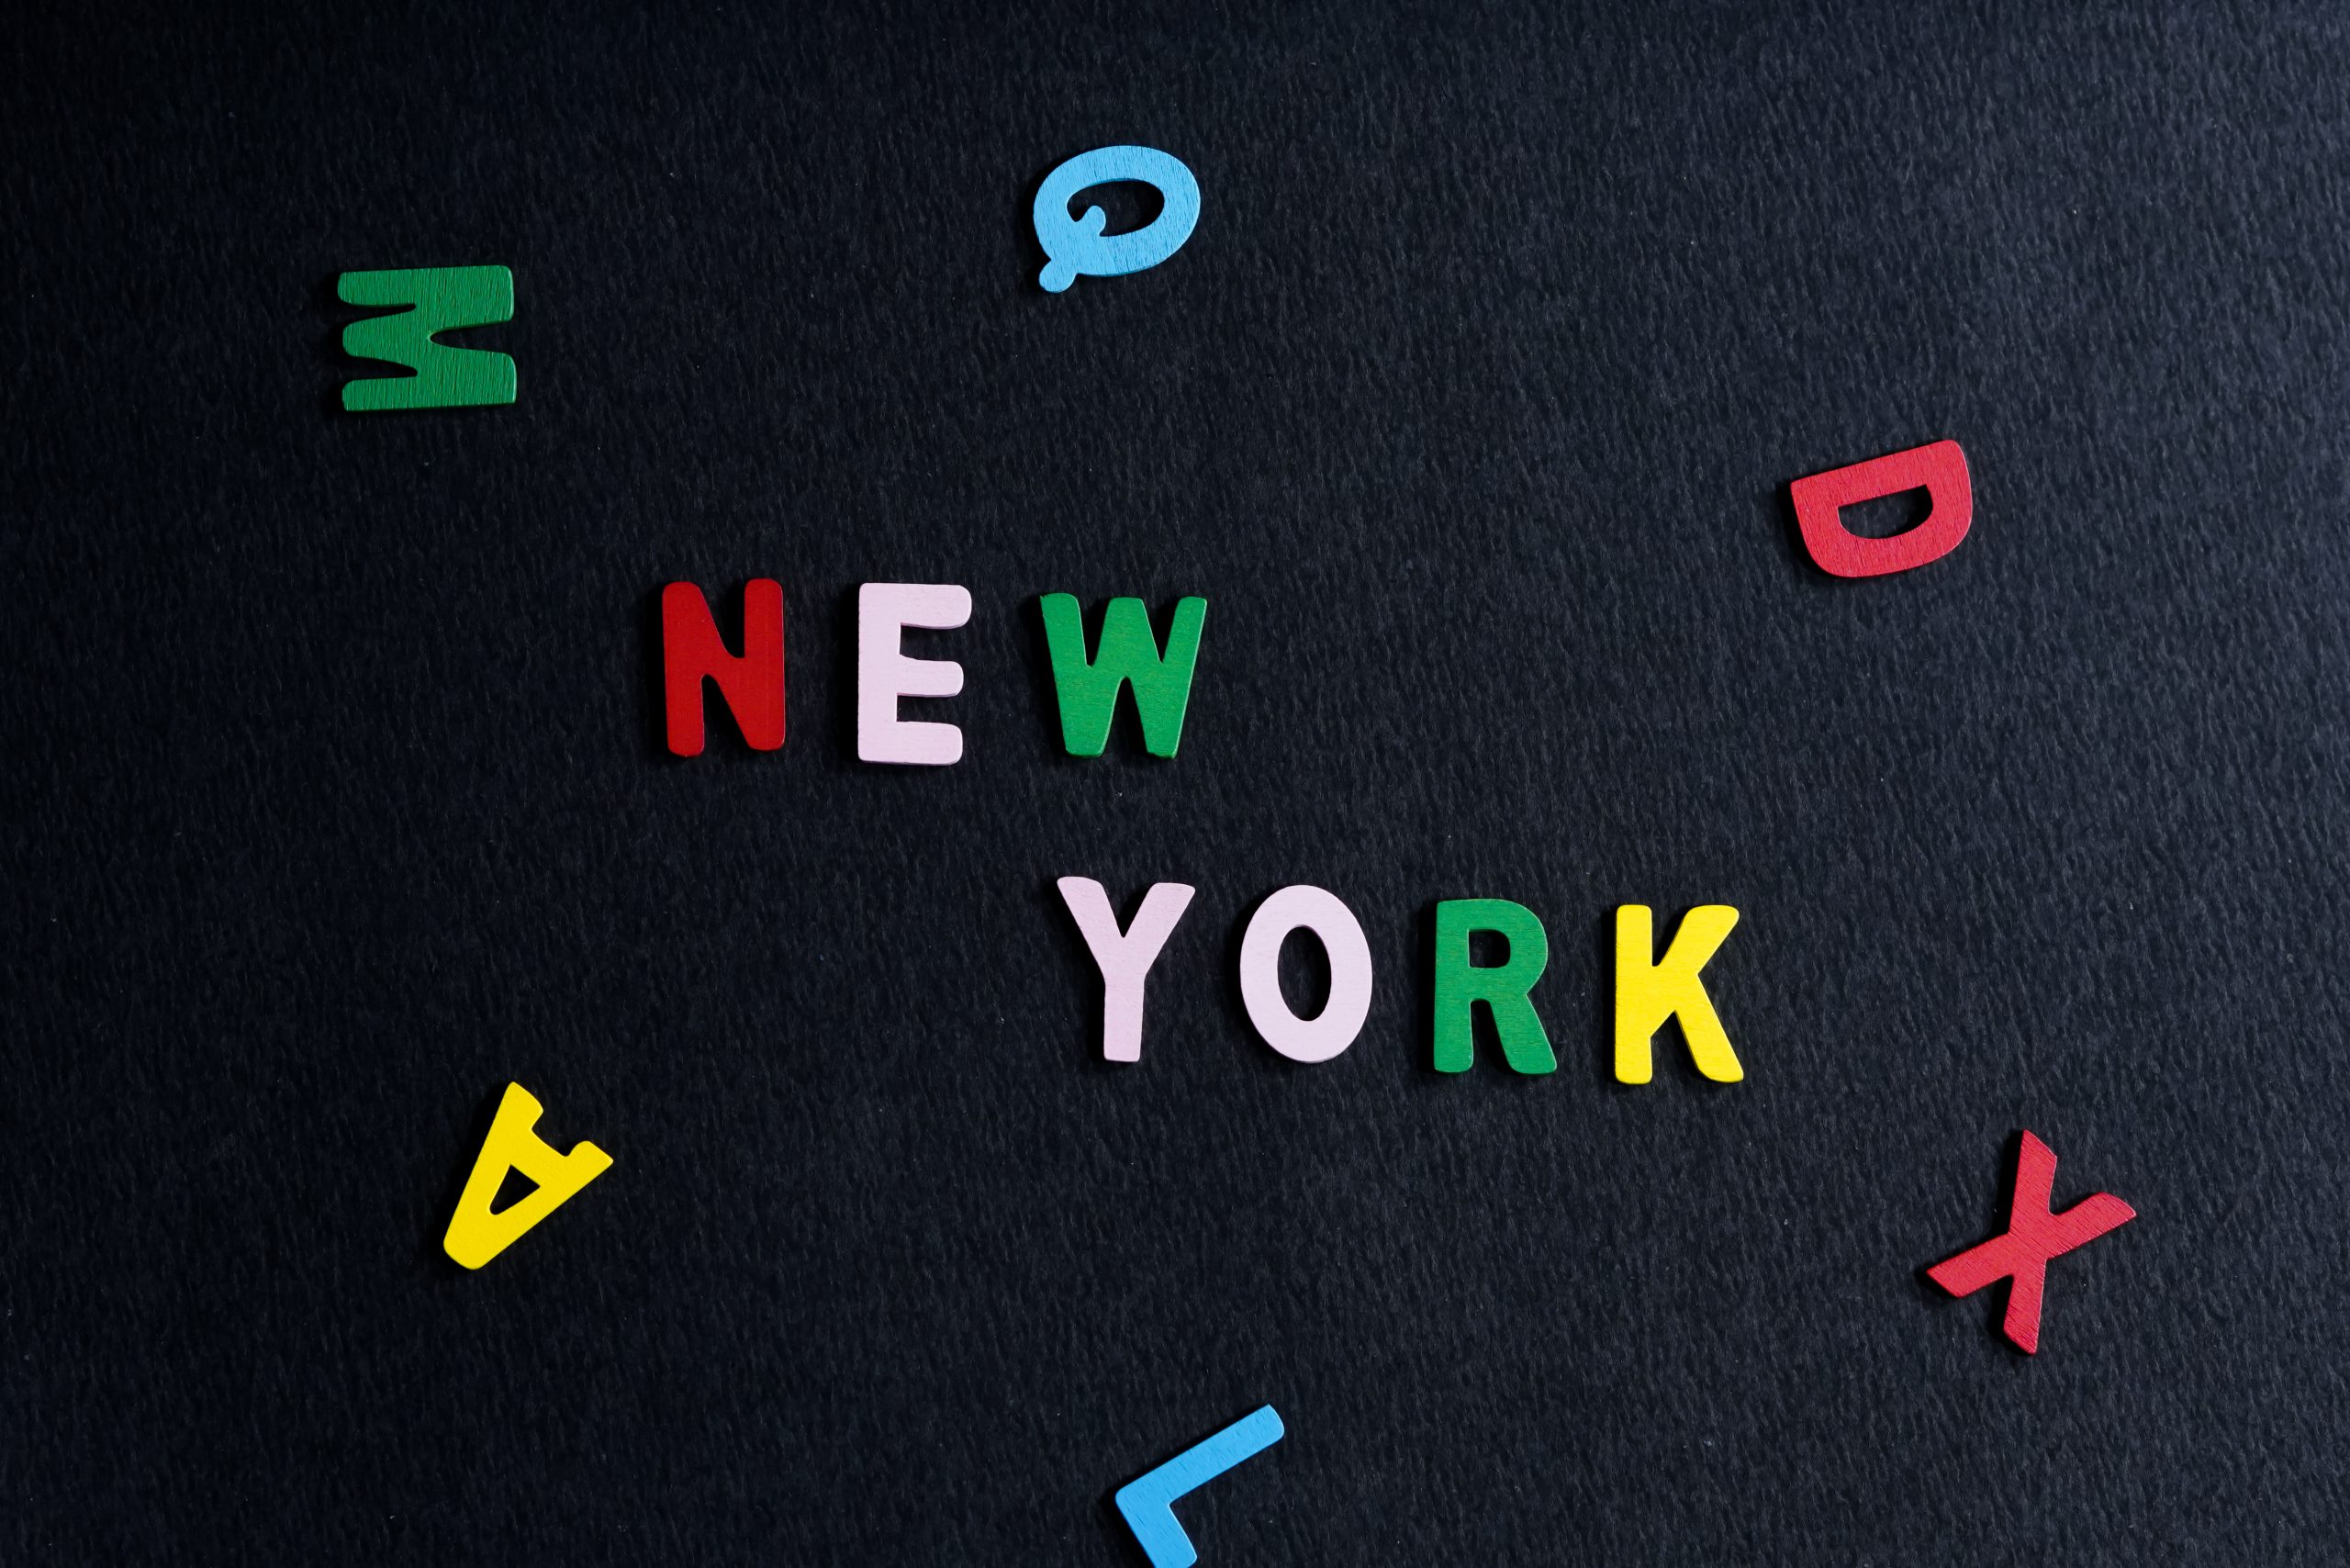 New York written on scrabble